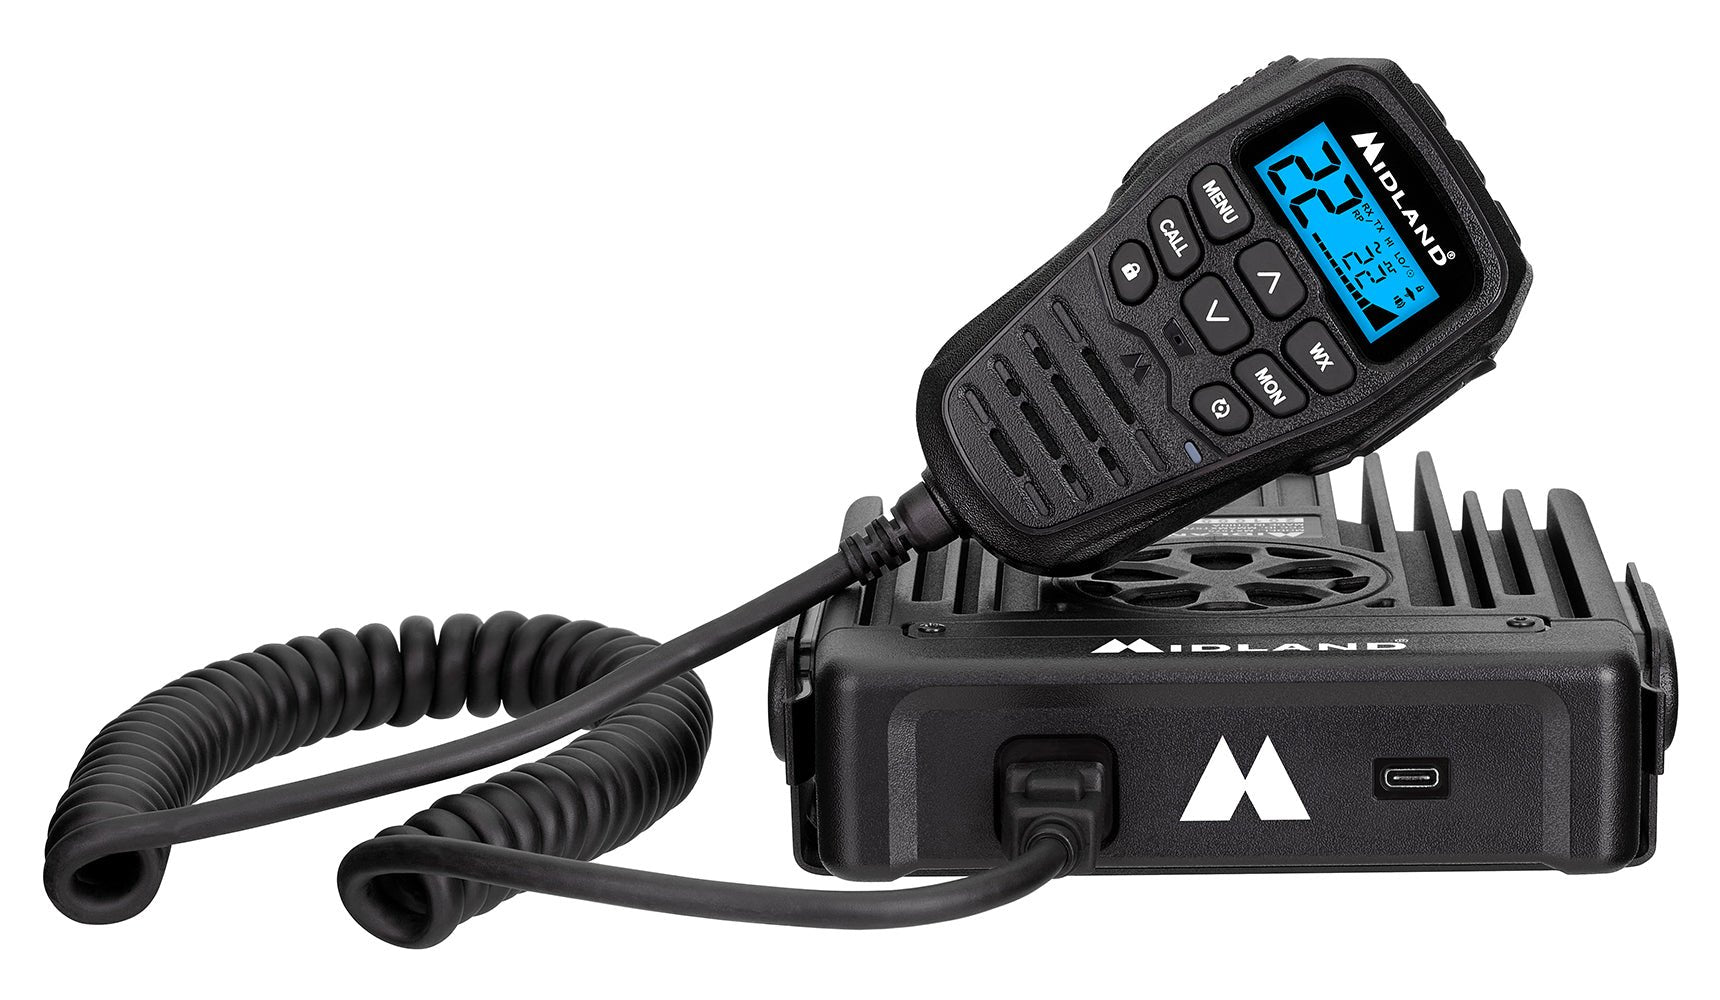 Midland MXT575 Micromobile® Two-Way Radio